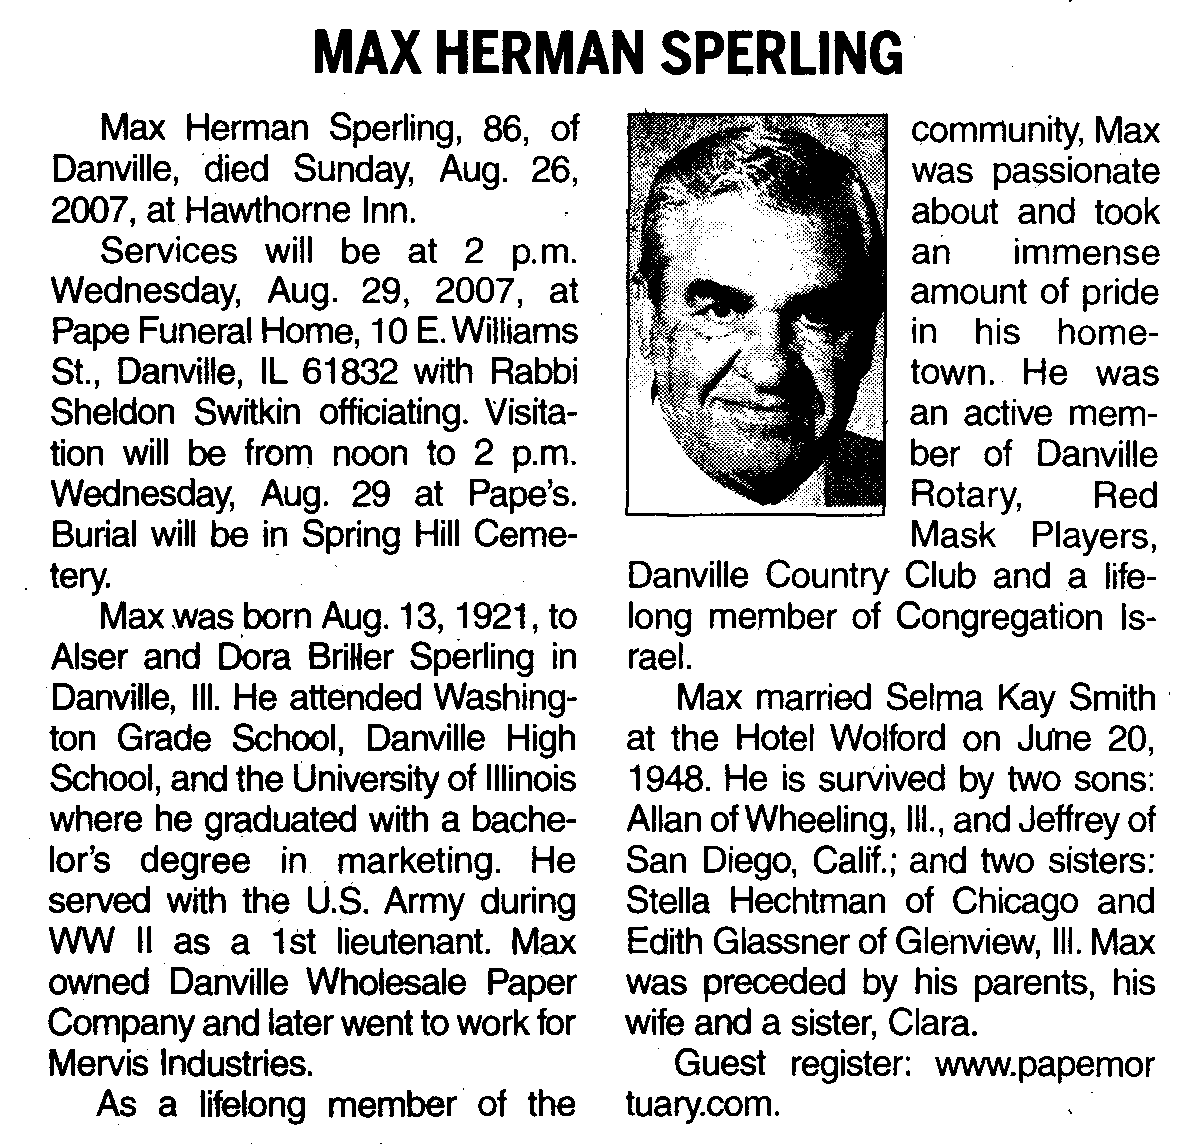 Herman Sperling, Max